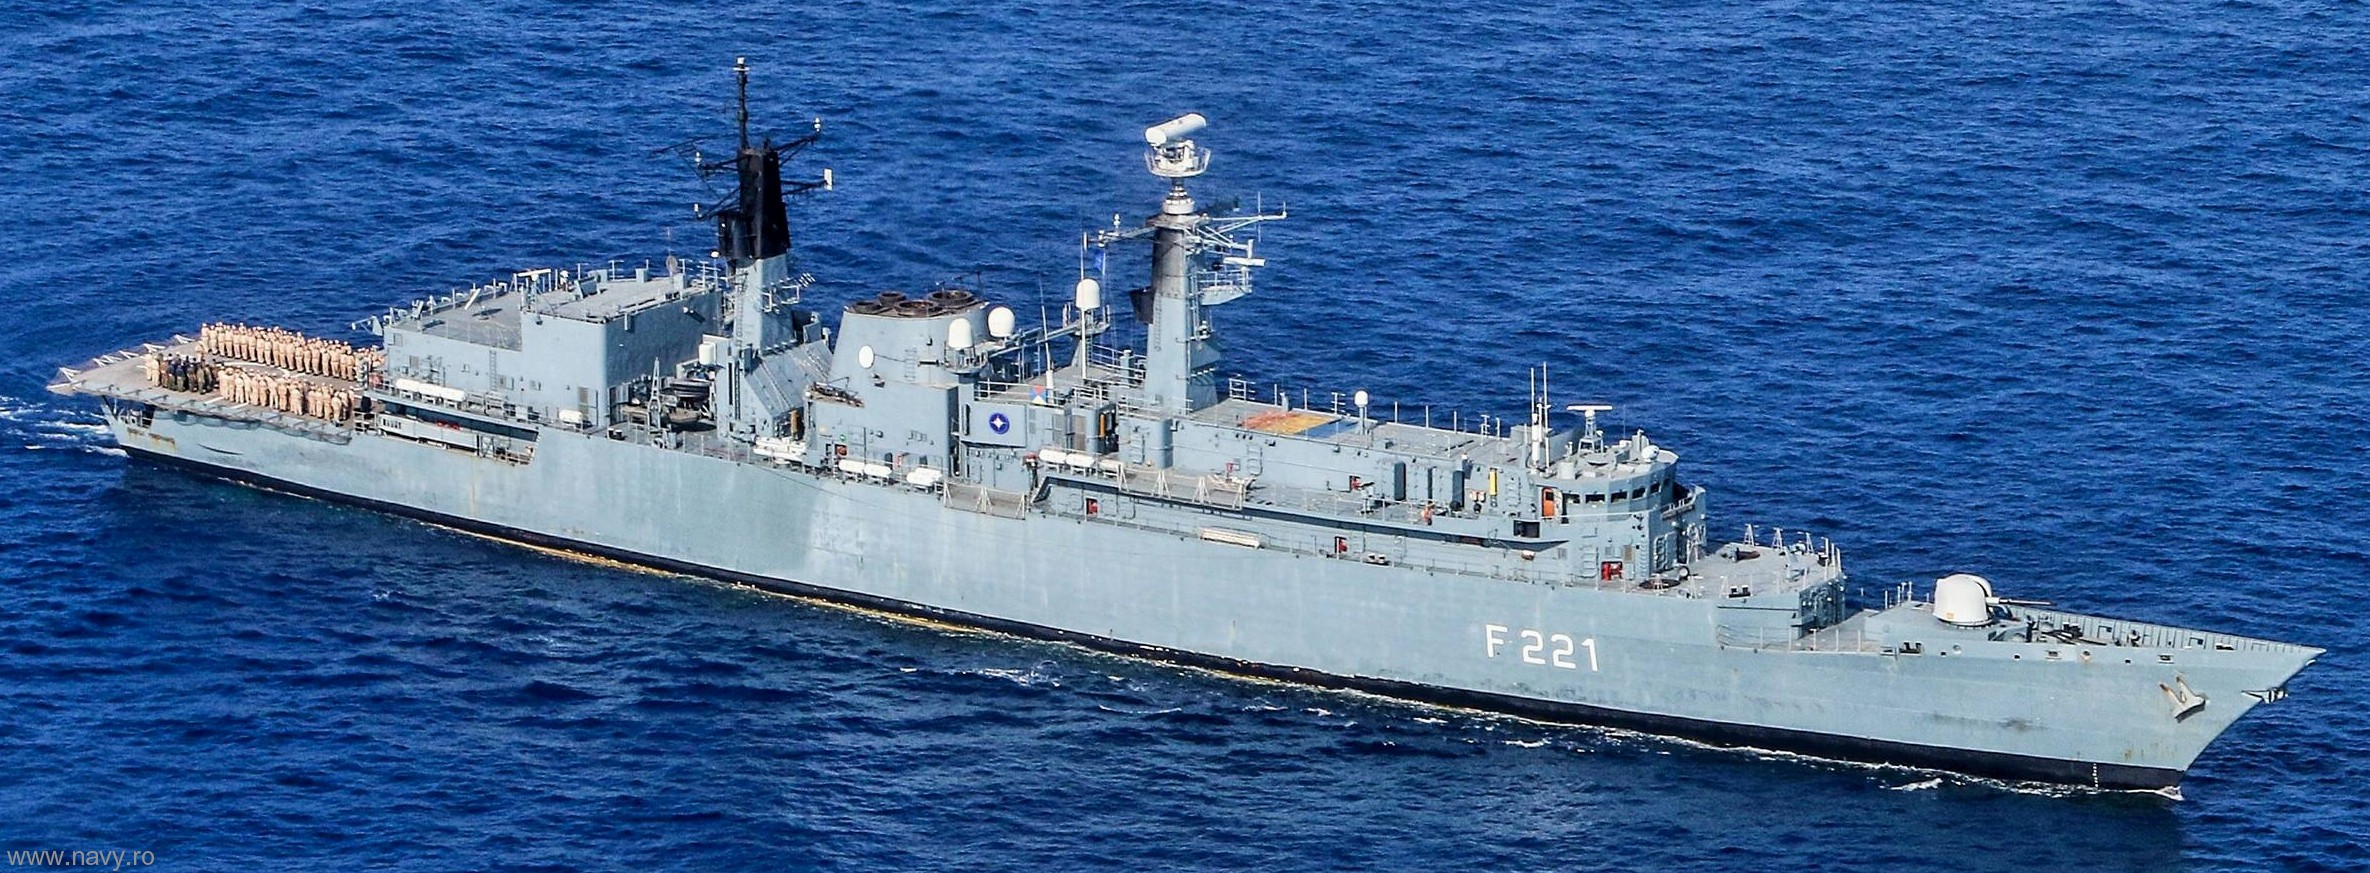 f-221 ros regele ferdinand frigate romanian navy type 22 broadsword class 69